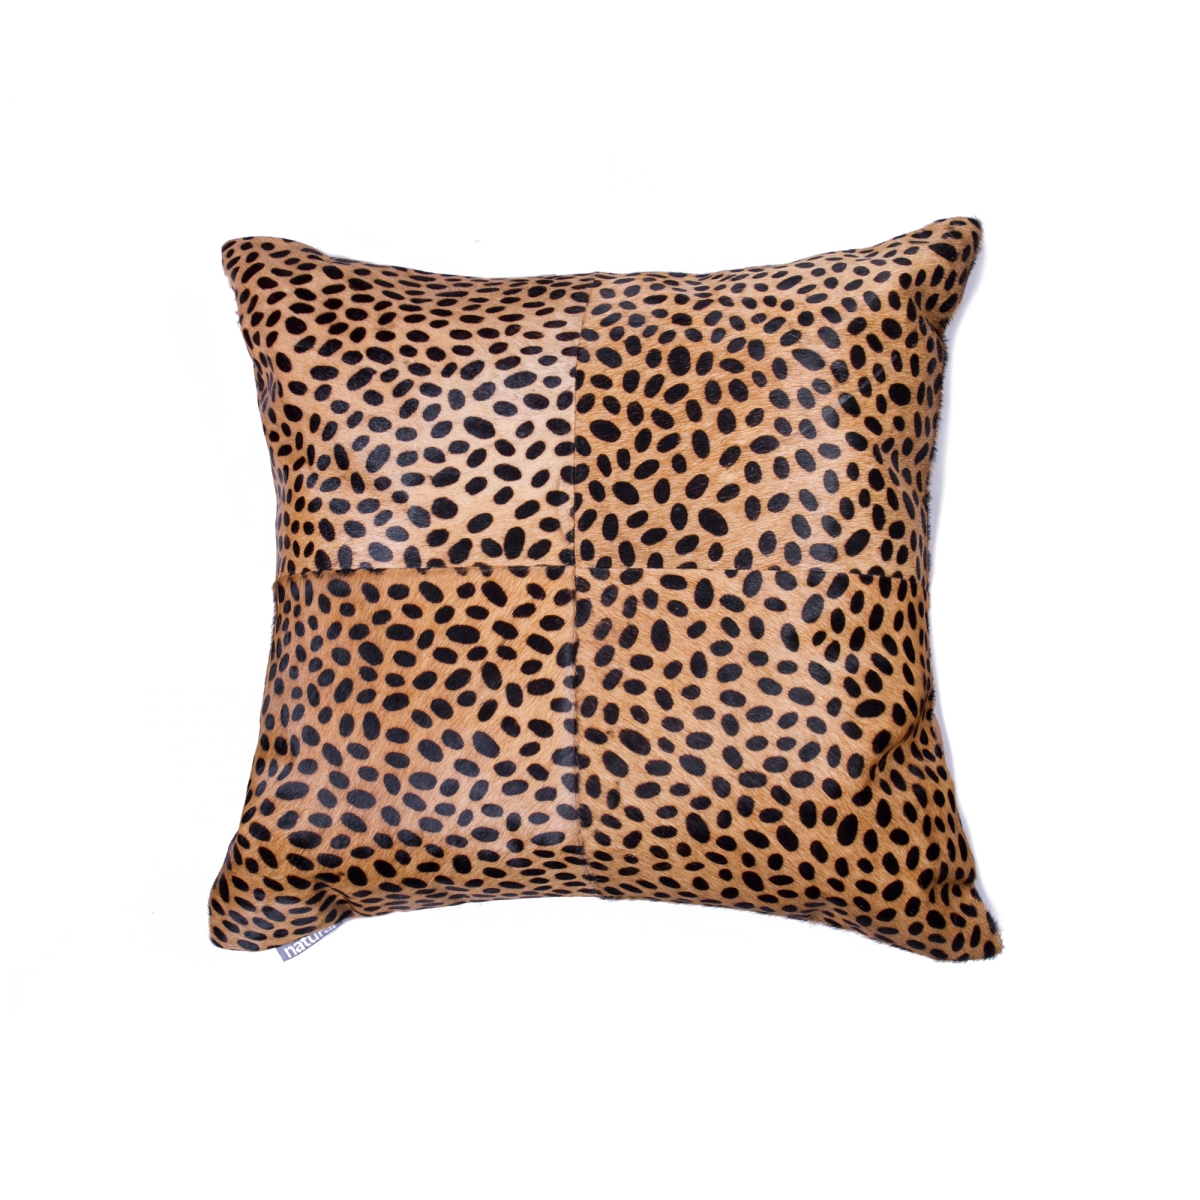 676685018625 18 X 18 In. Torino Togo Quattro Pillow - Cheetah